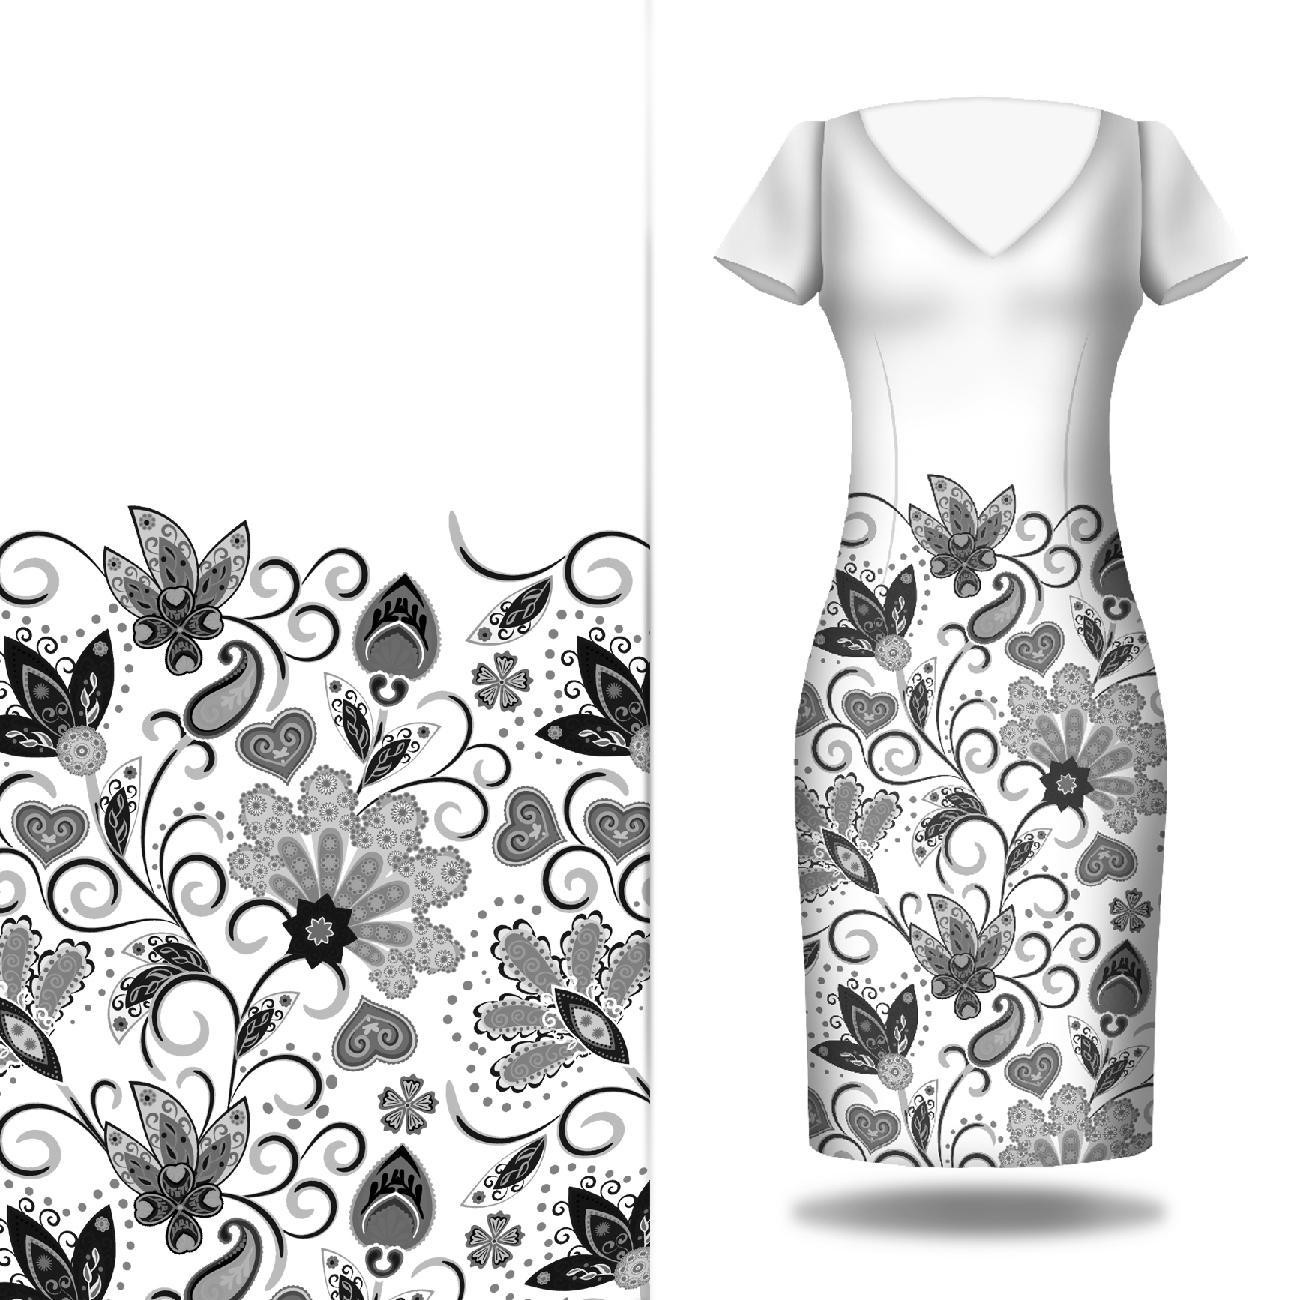 FLOWERS (pattern no. 2 grey) / white - dress panel crepe